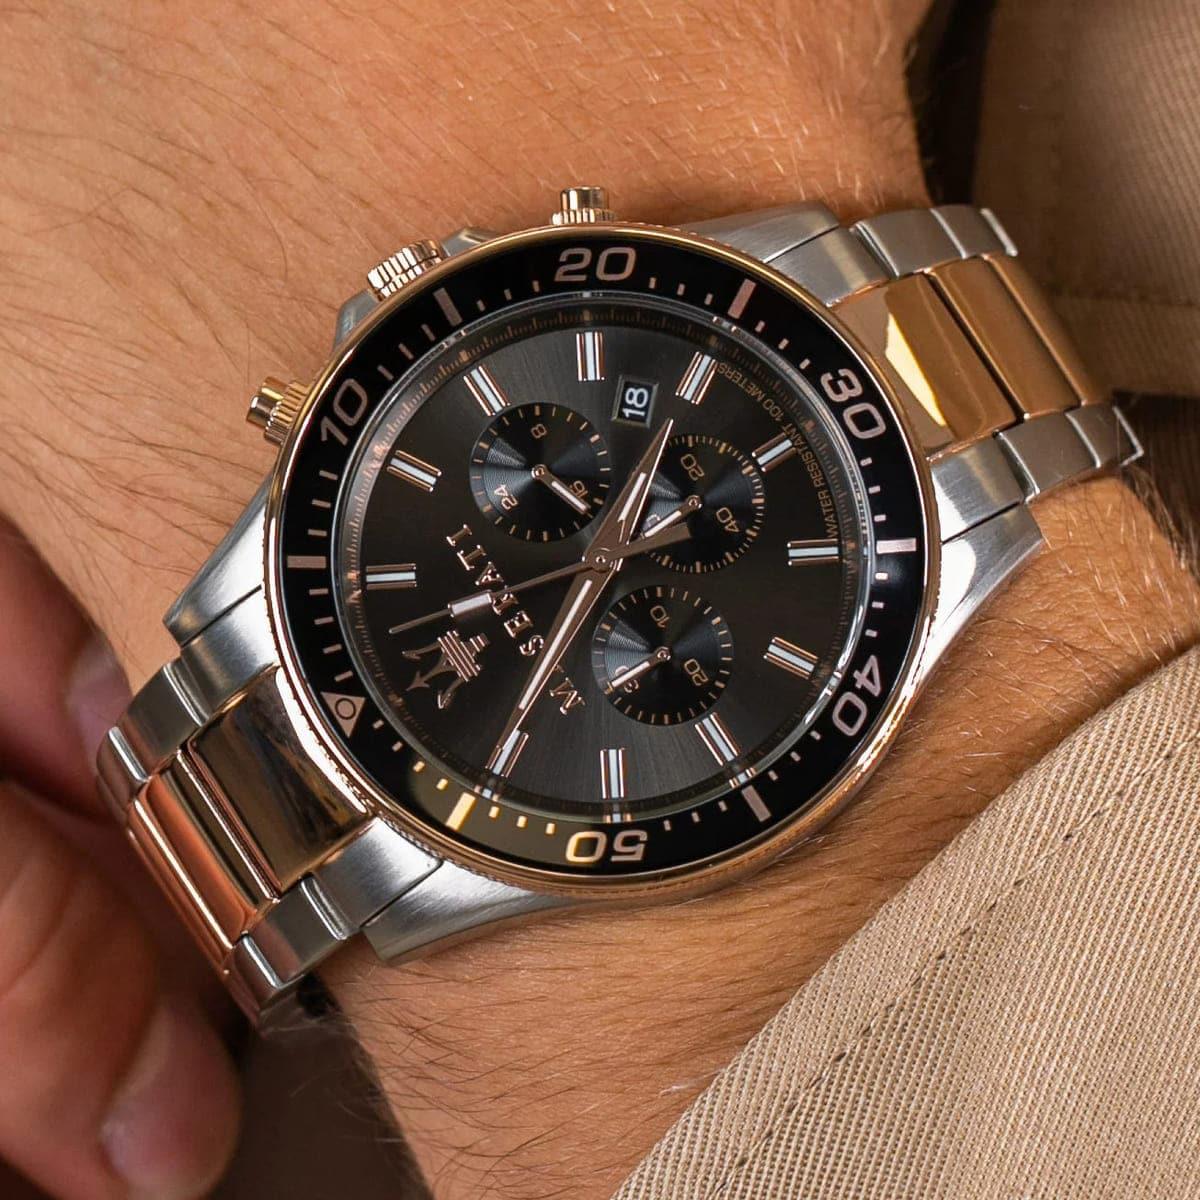 Maserati SFIDA Rose Quartz Black Dial Stainless Steel Watch For Men - R8873640002